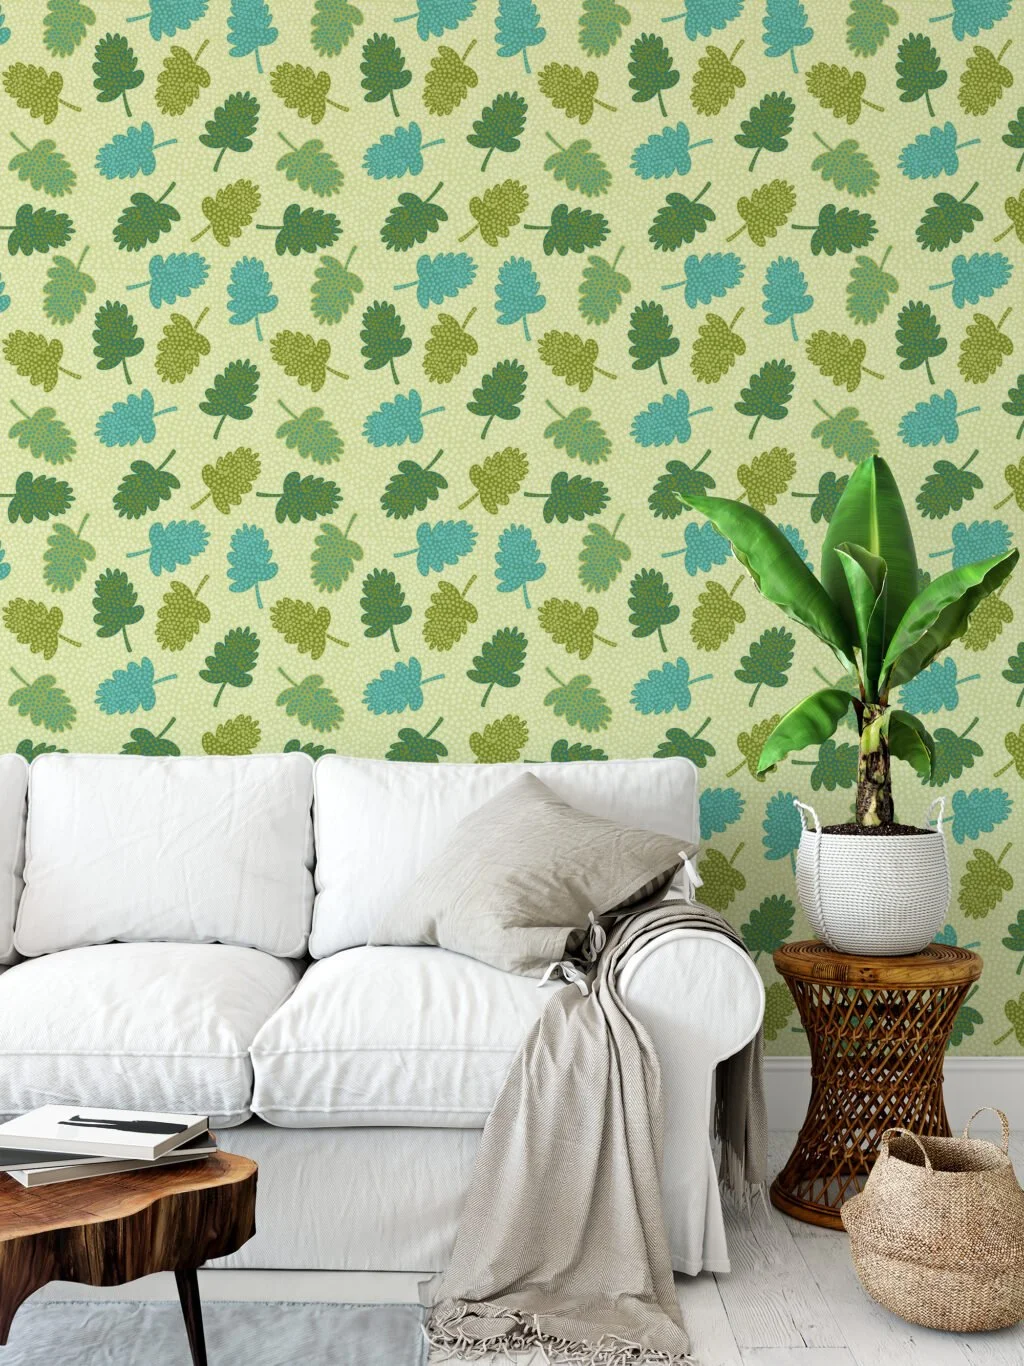 Green Leaves Pattern Illustration Wallpaper, Charming Leaf Motif Peel & Stick Wall Mural